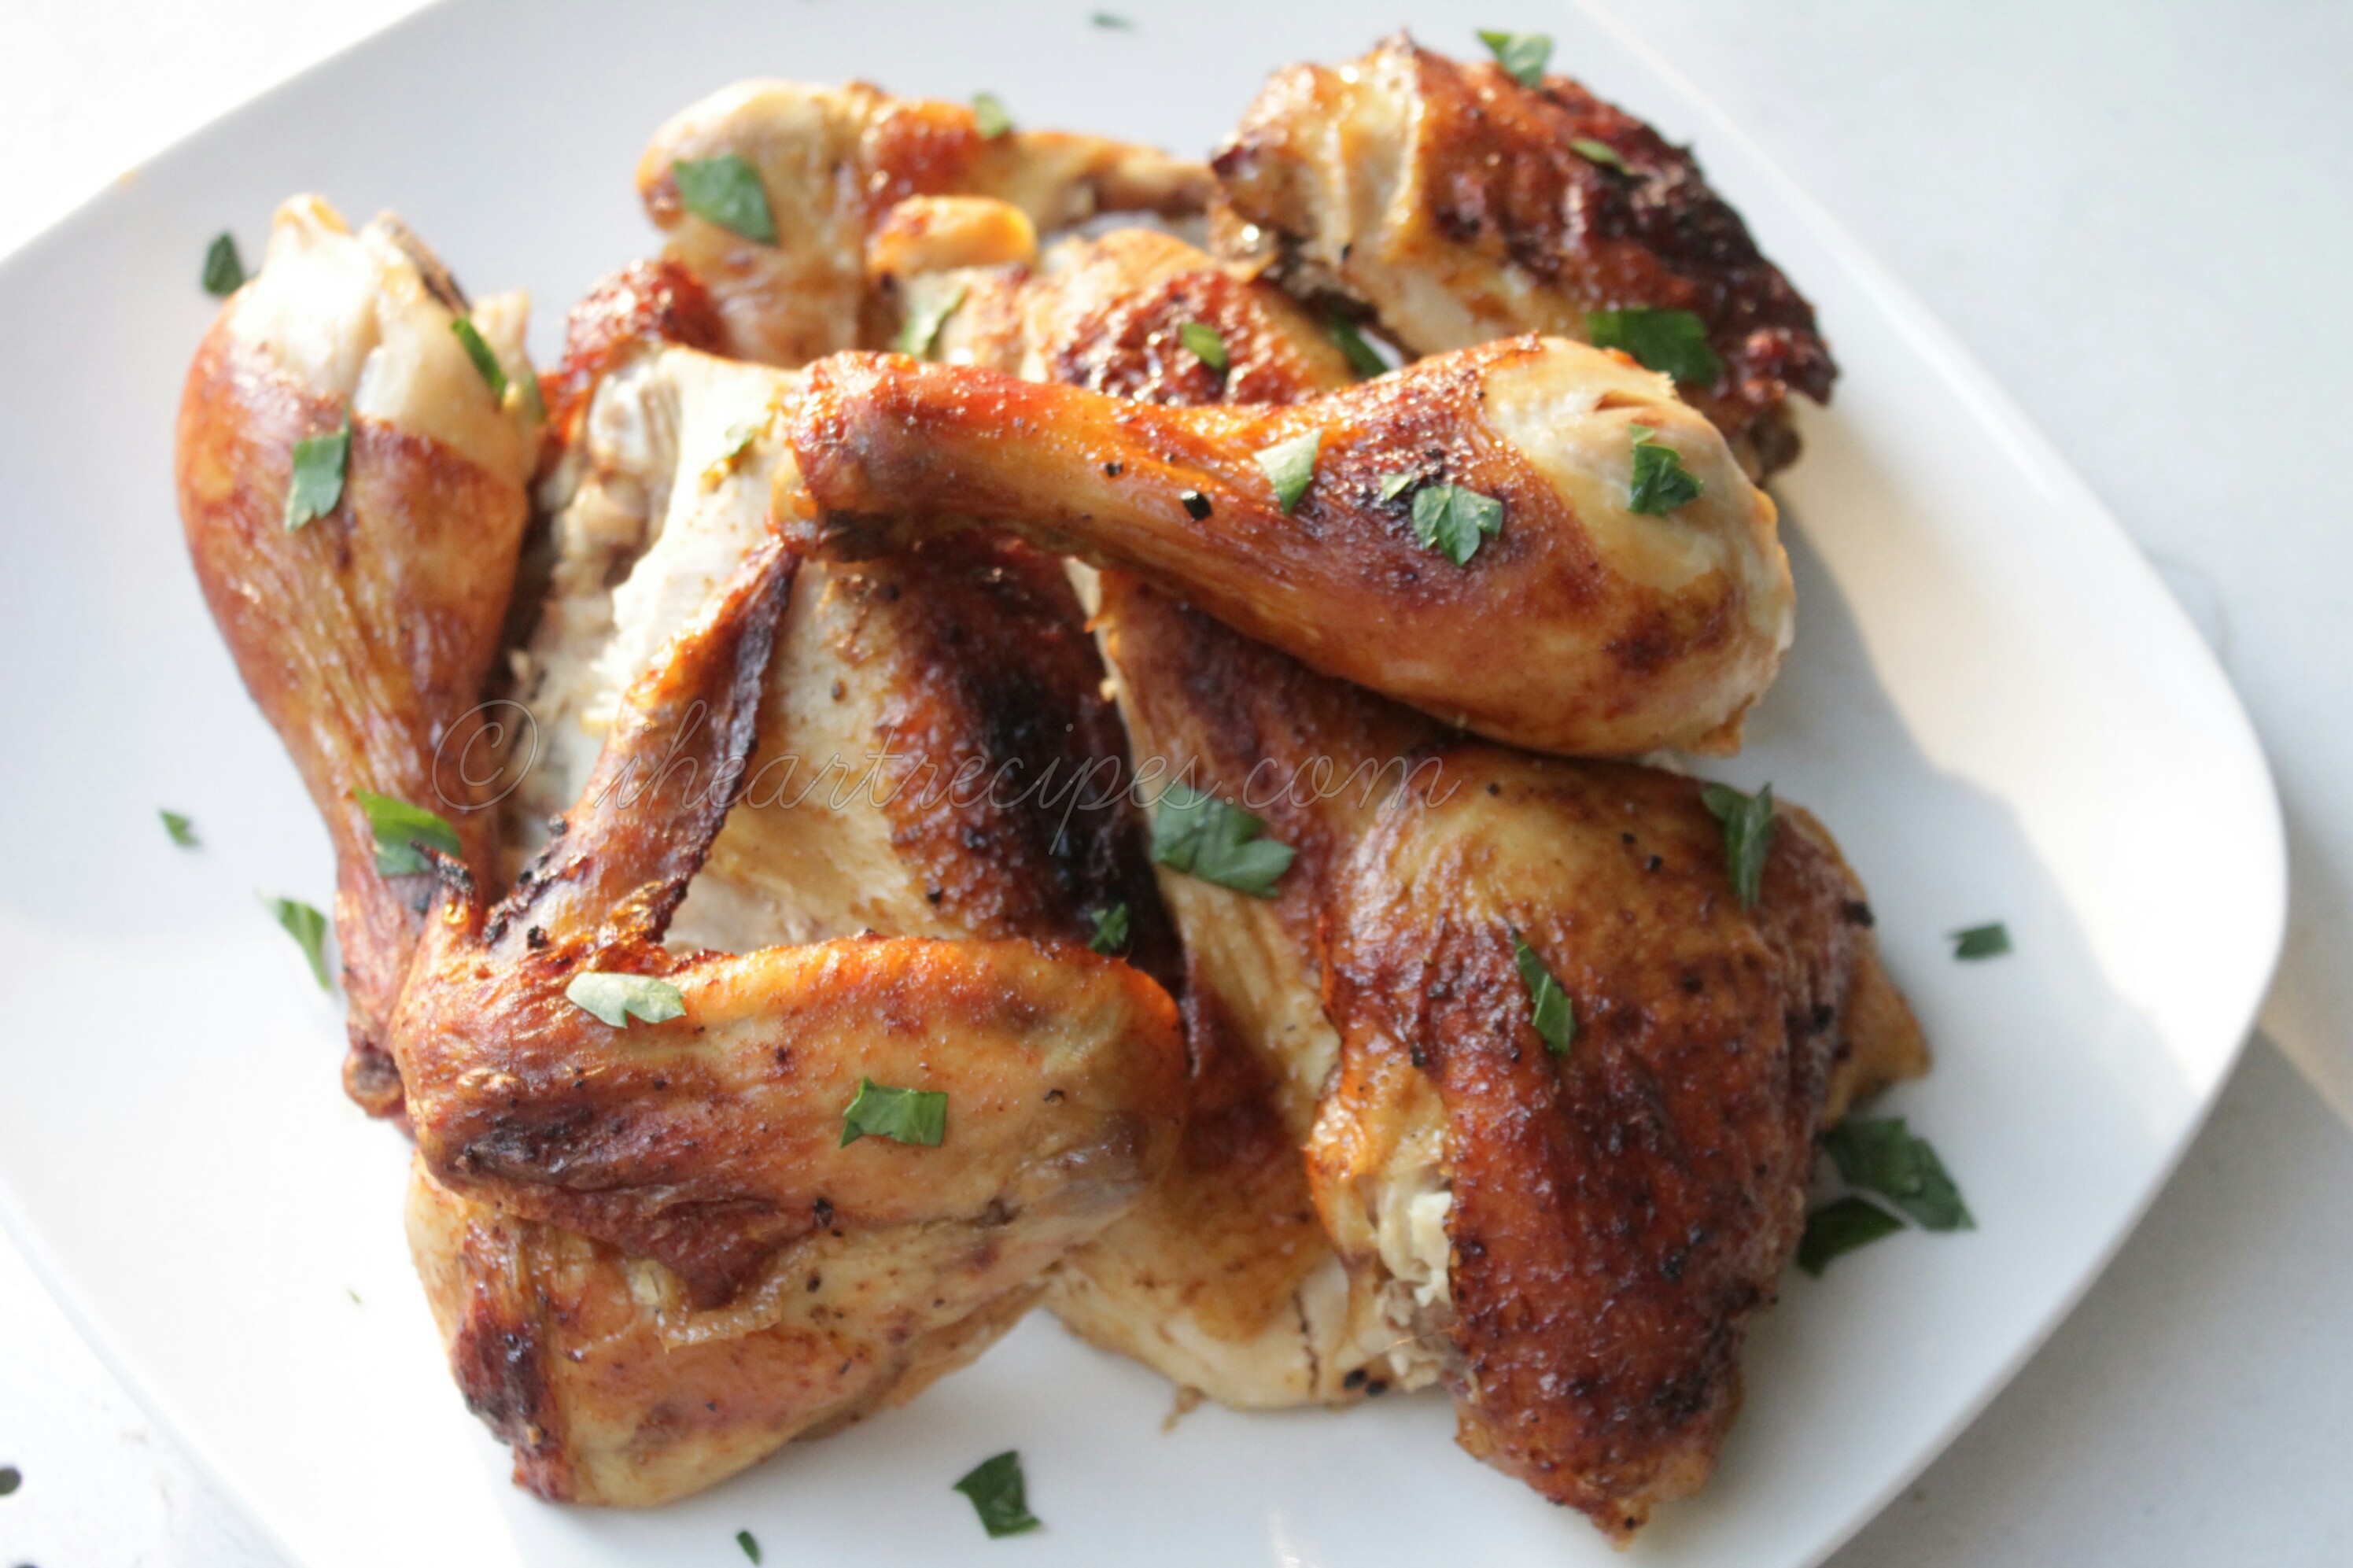 Simple Roast Chicken is versatile and always yummy!